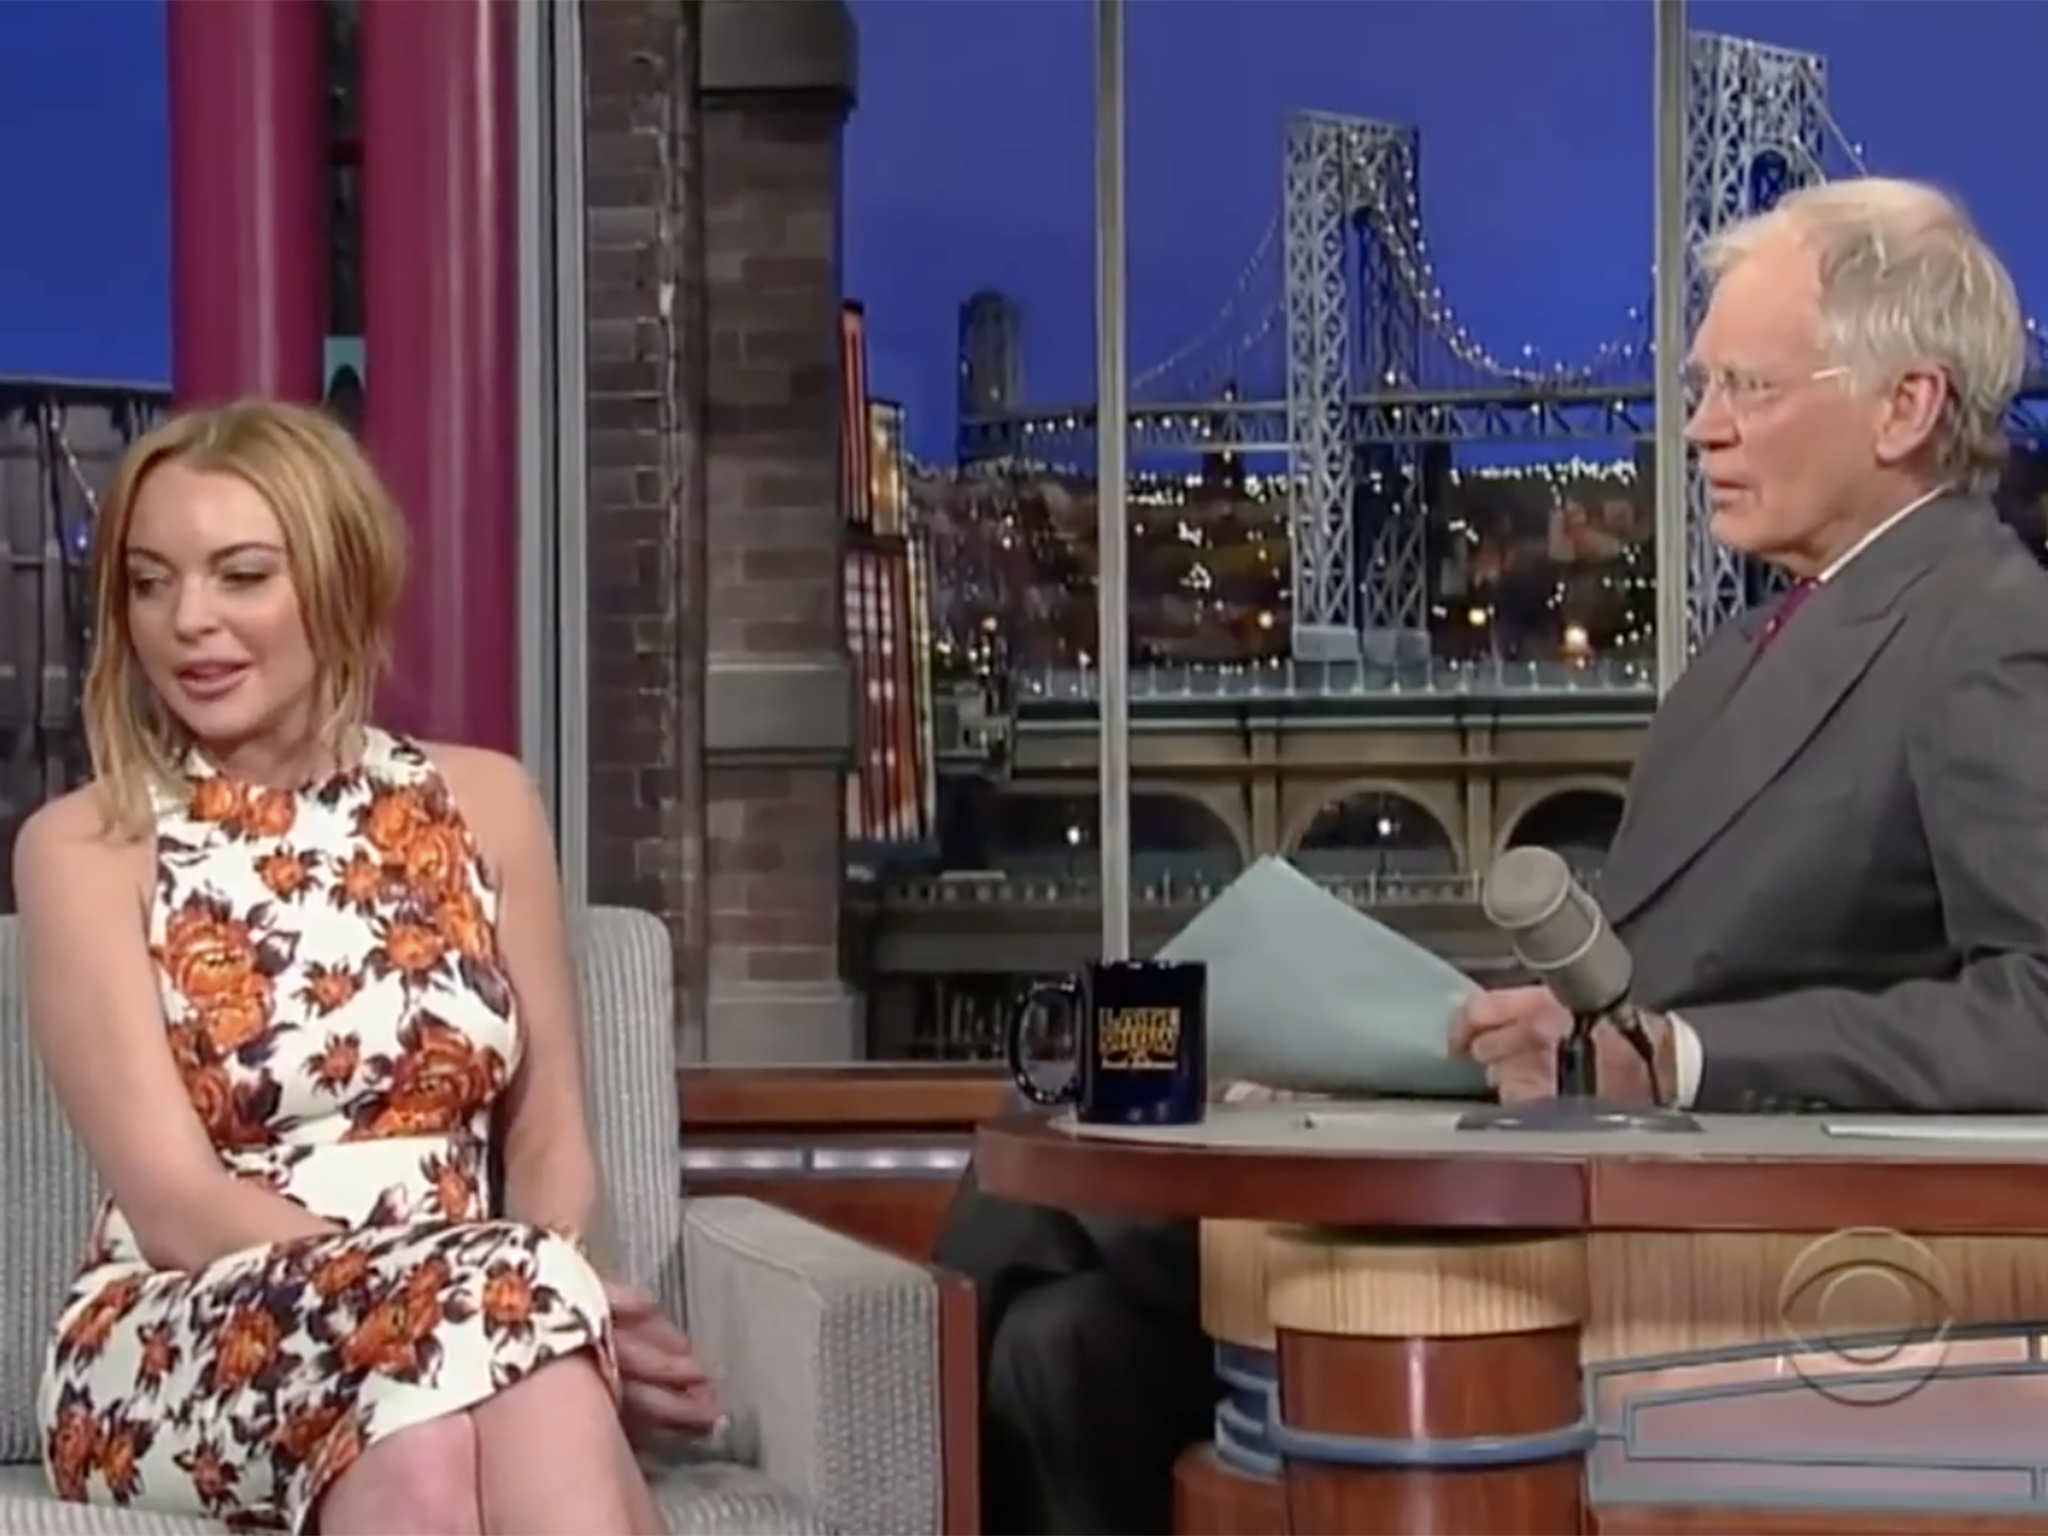 Lindsay Lohan appears on David Letterman’s talk show in 2013